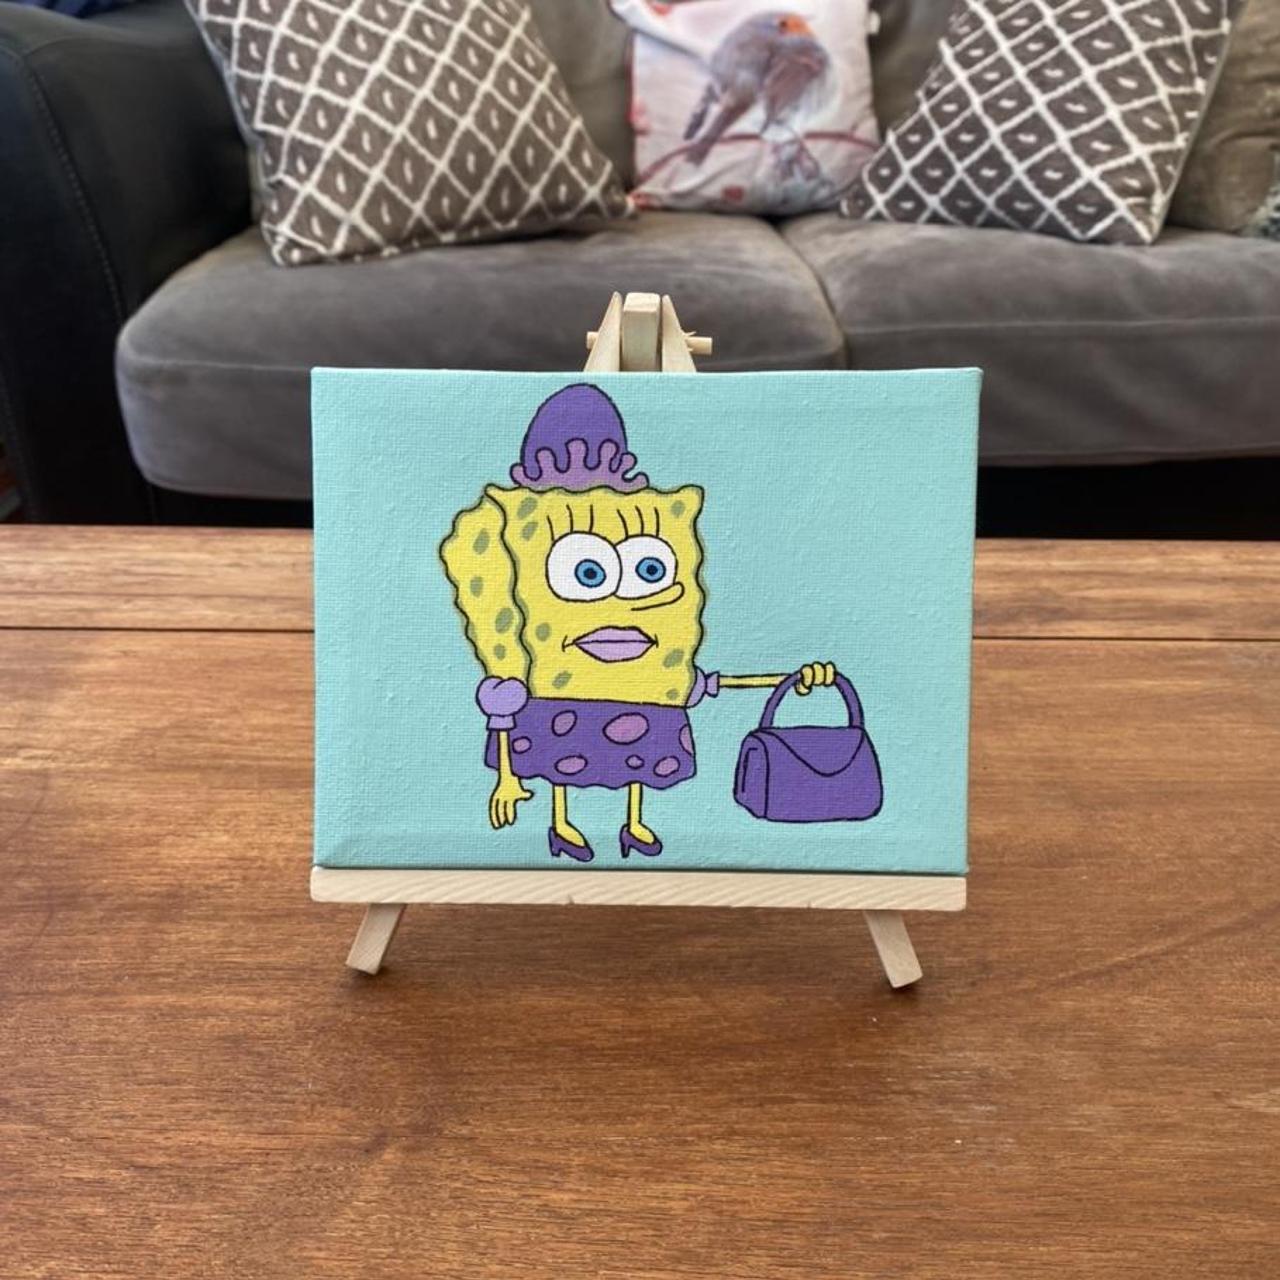 Sad spongebob 5x7 acrylic painting - Depop